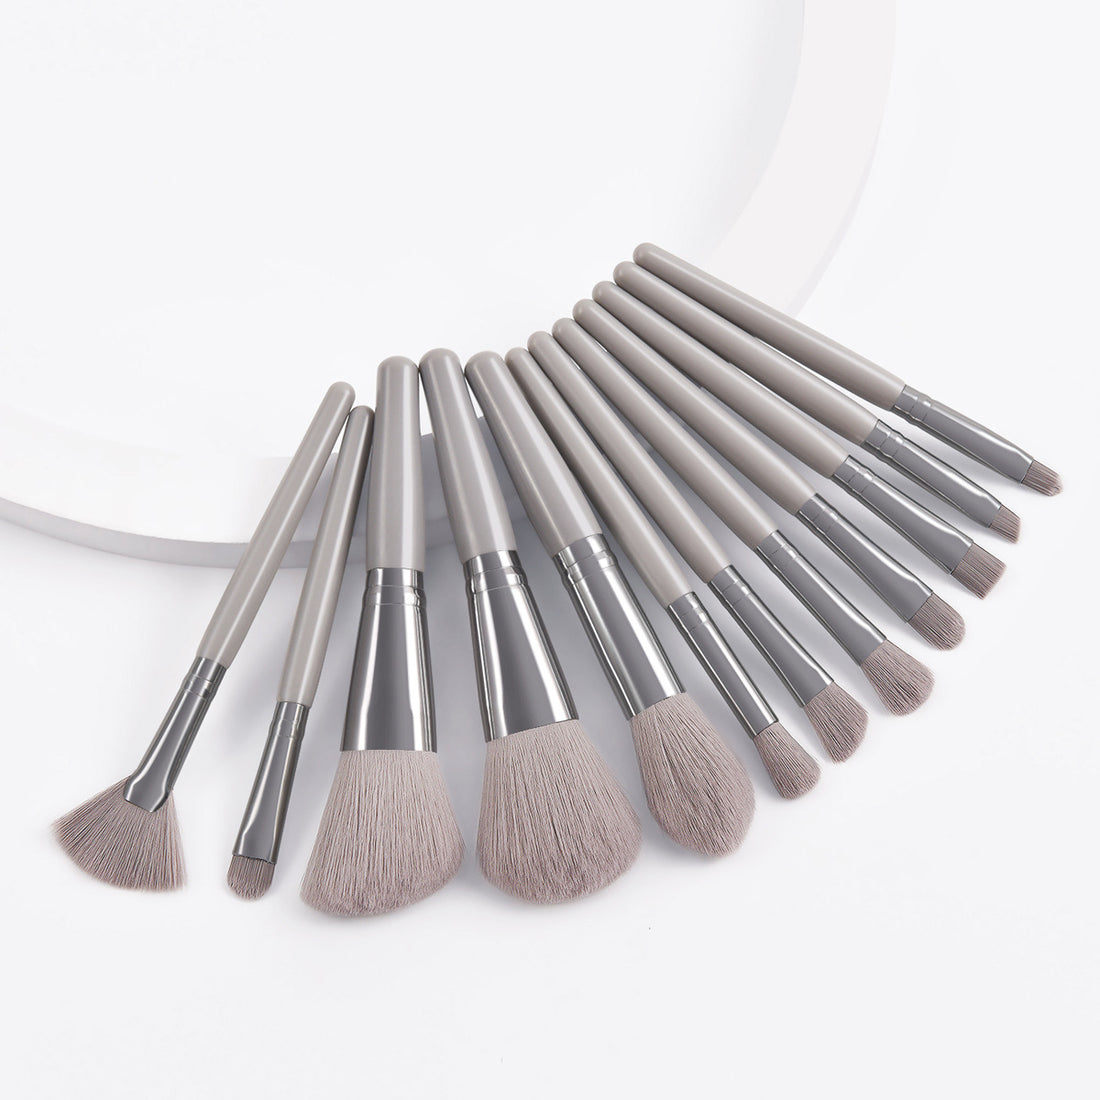 12 Makeup Brushes Set Beauty Tools